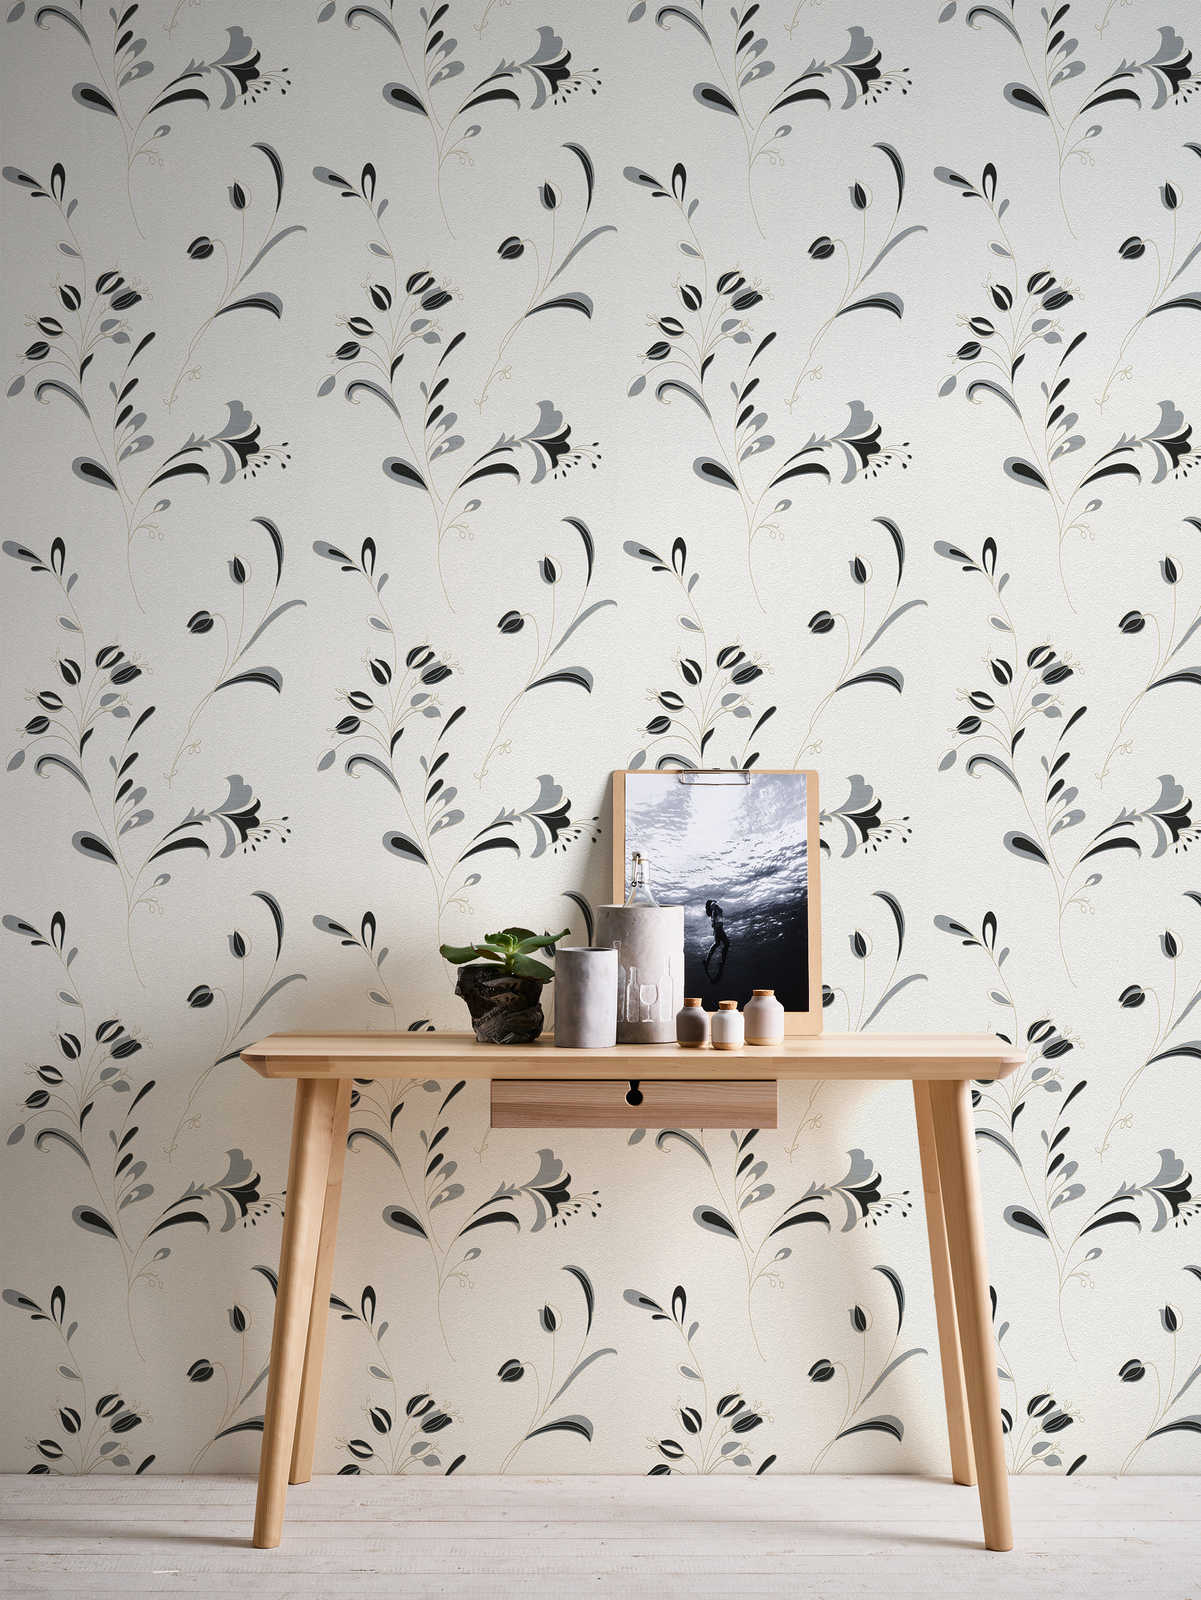             Wallpaper floral motif, silver accents & texture pattern - black, white, silver
        